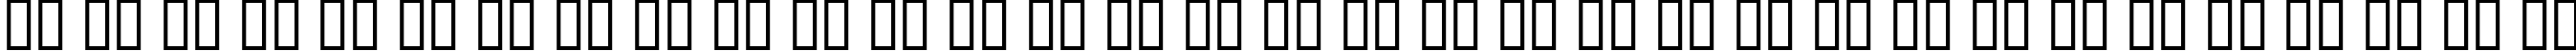 Пример написания русского алфавита шрифтом American Scribe